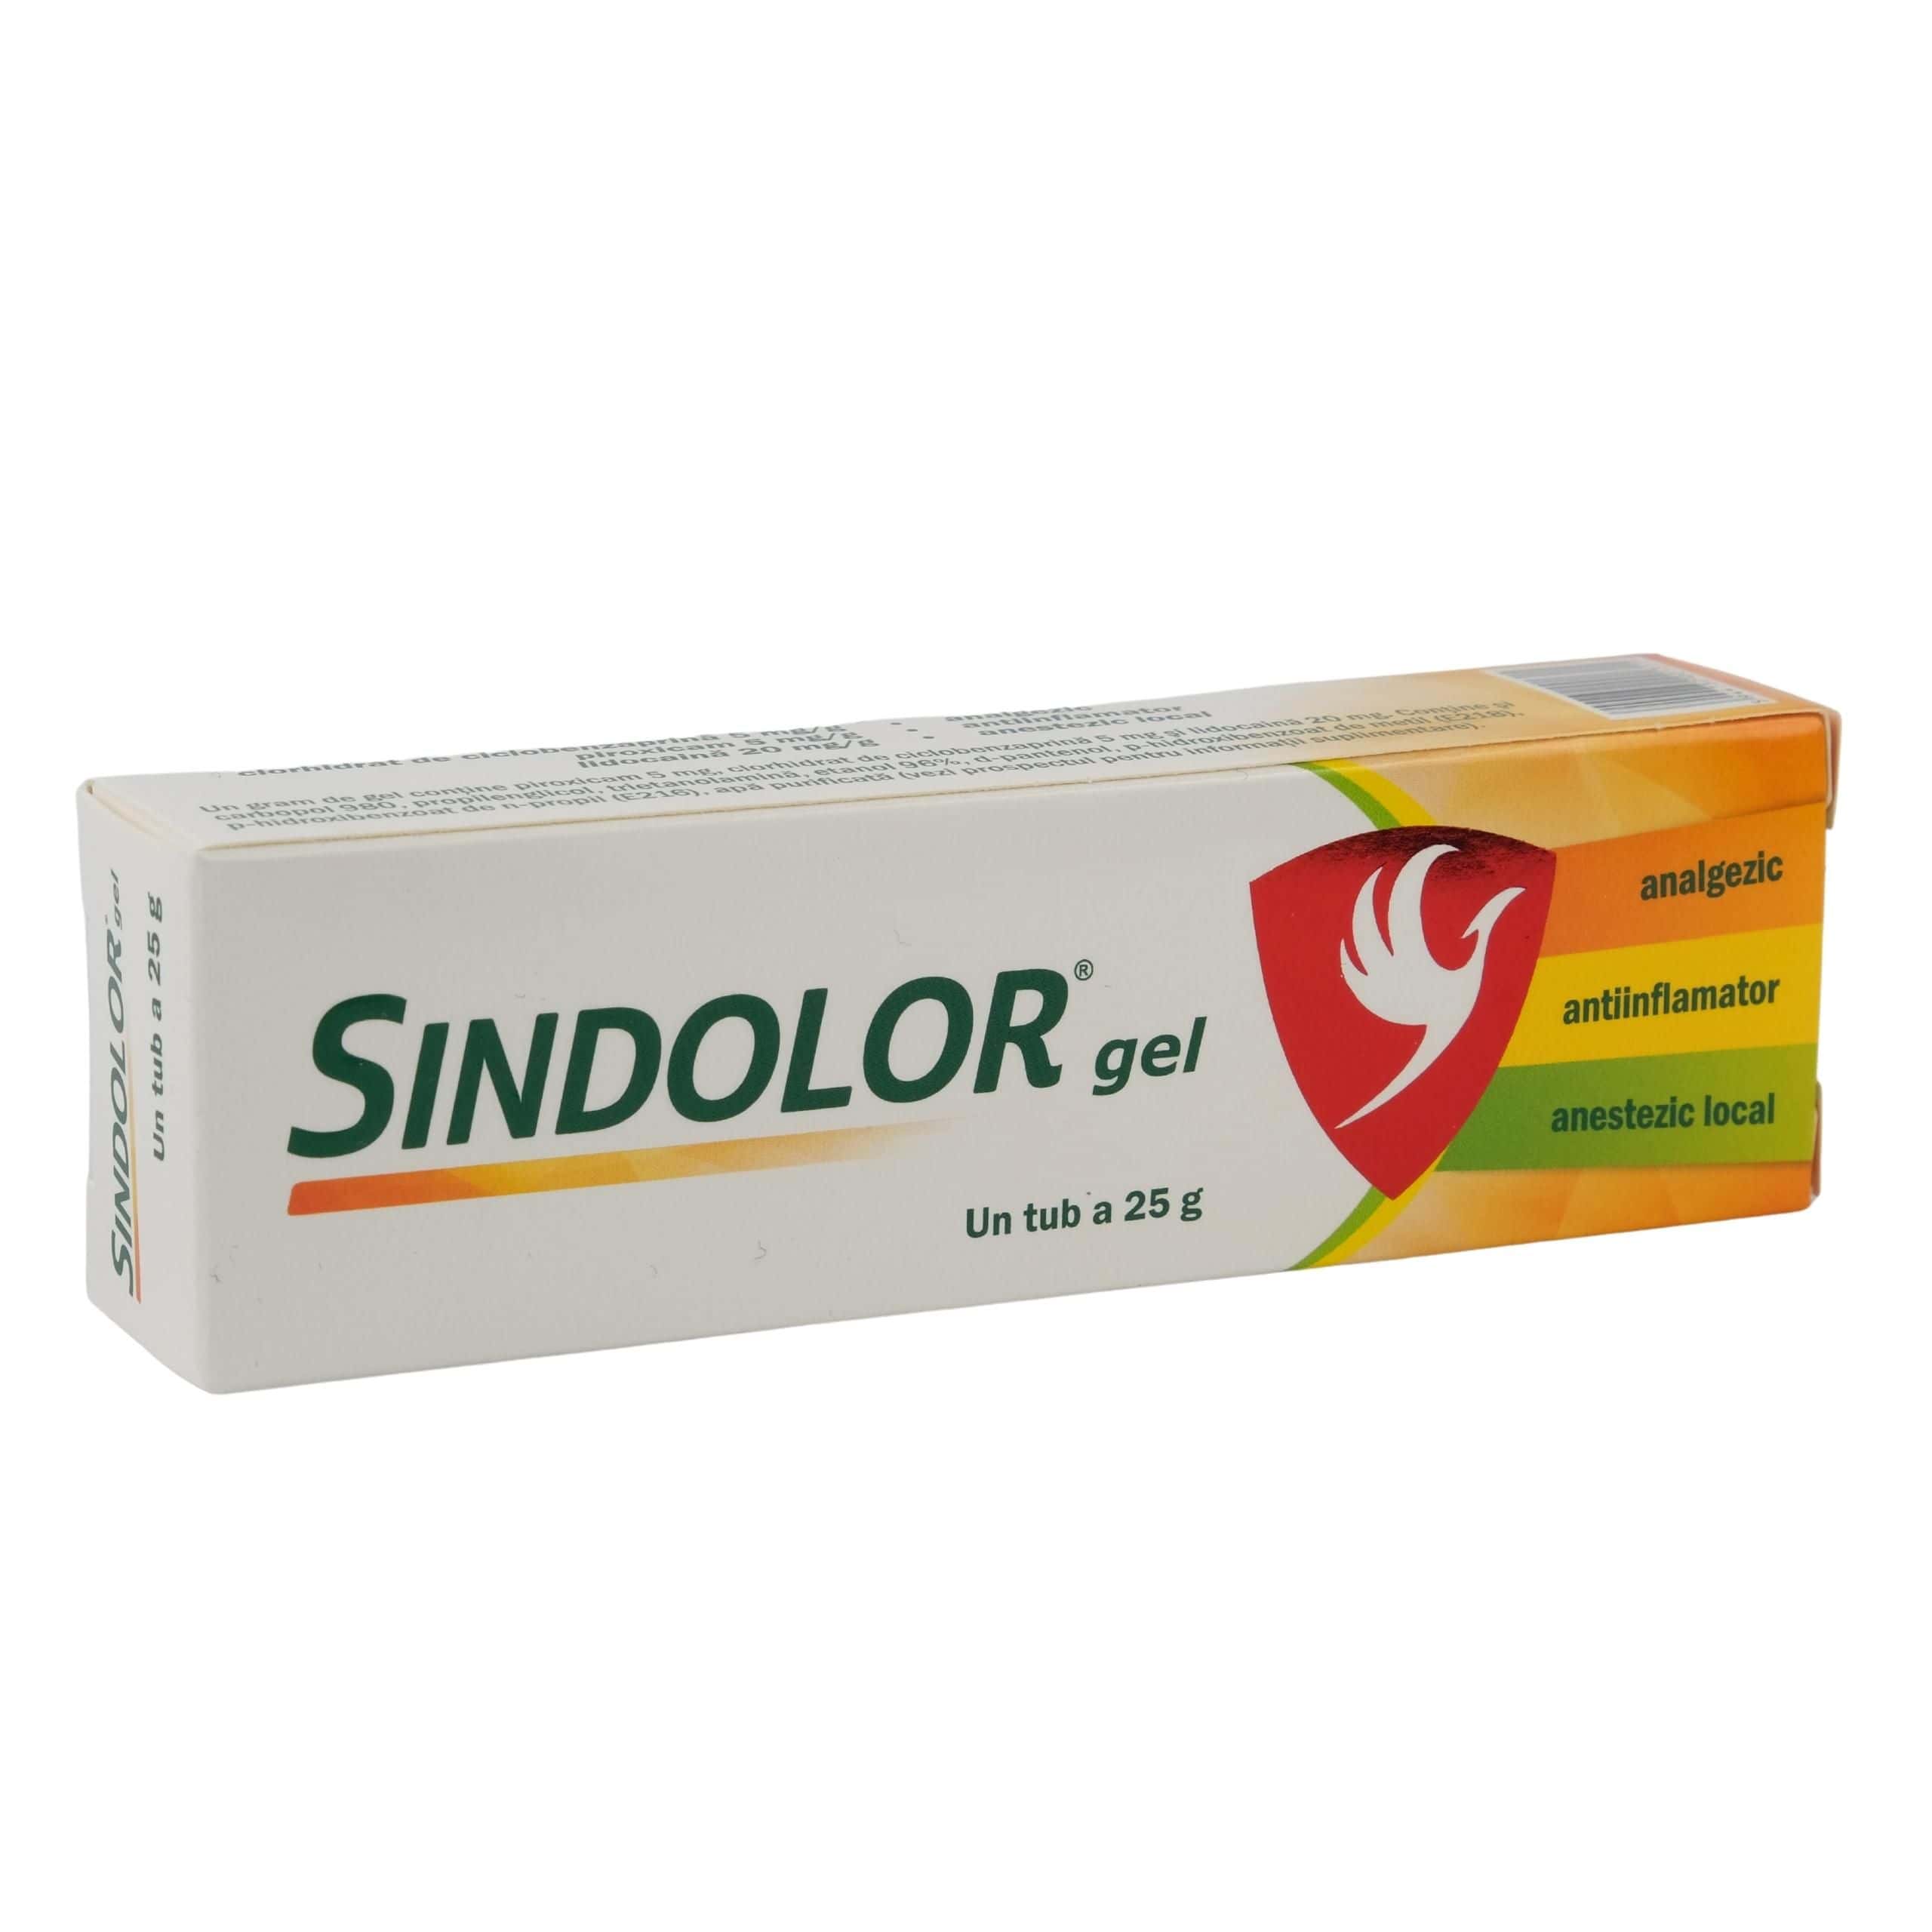 Sindolor gel 5mg+5mg+20mg/g 25g N1